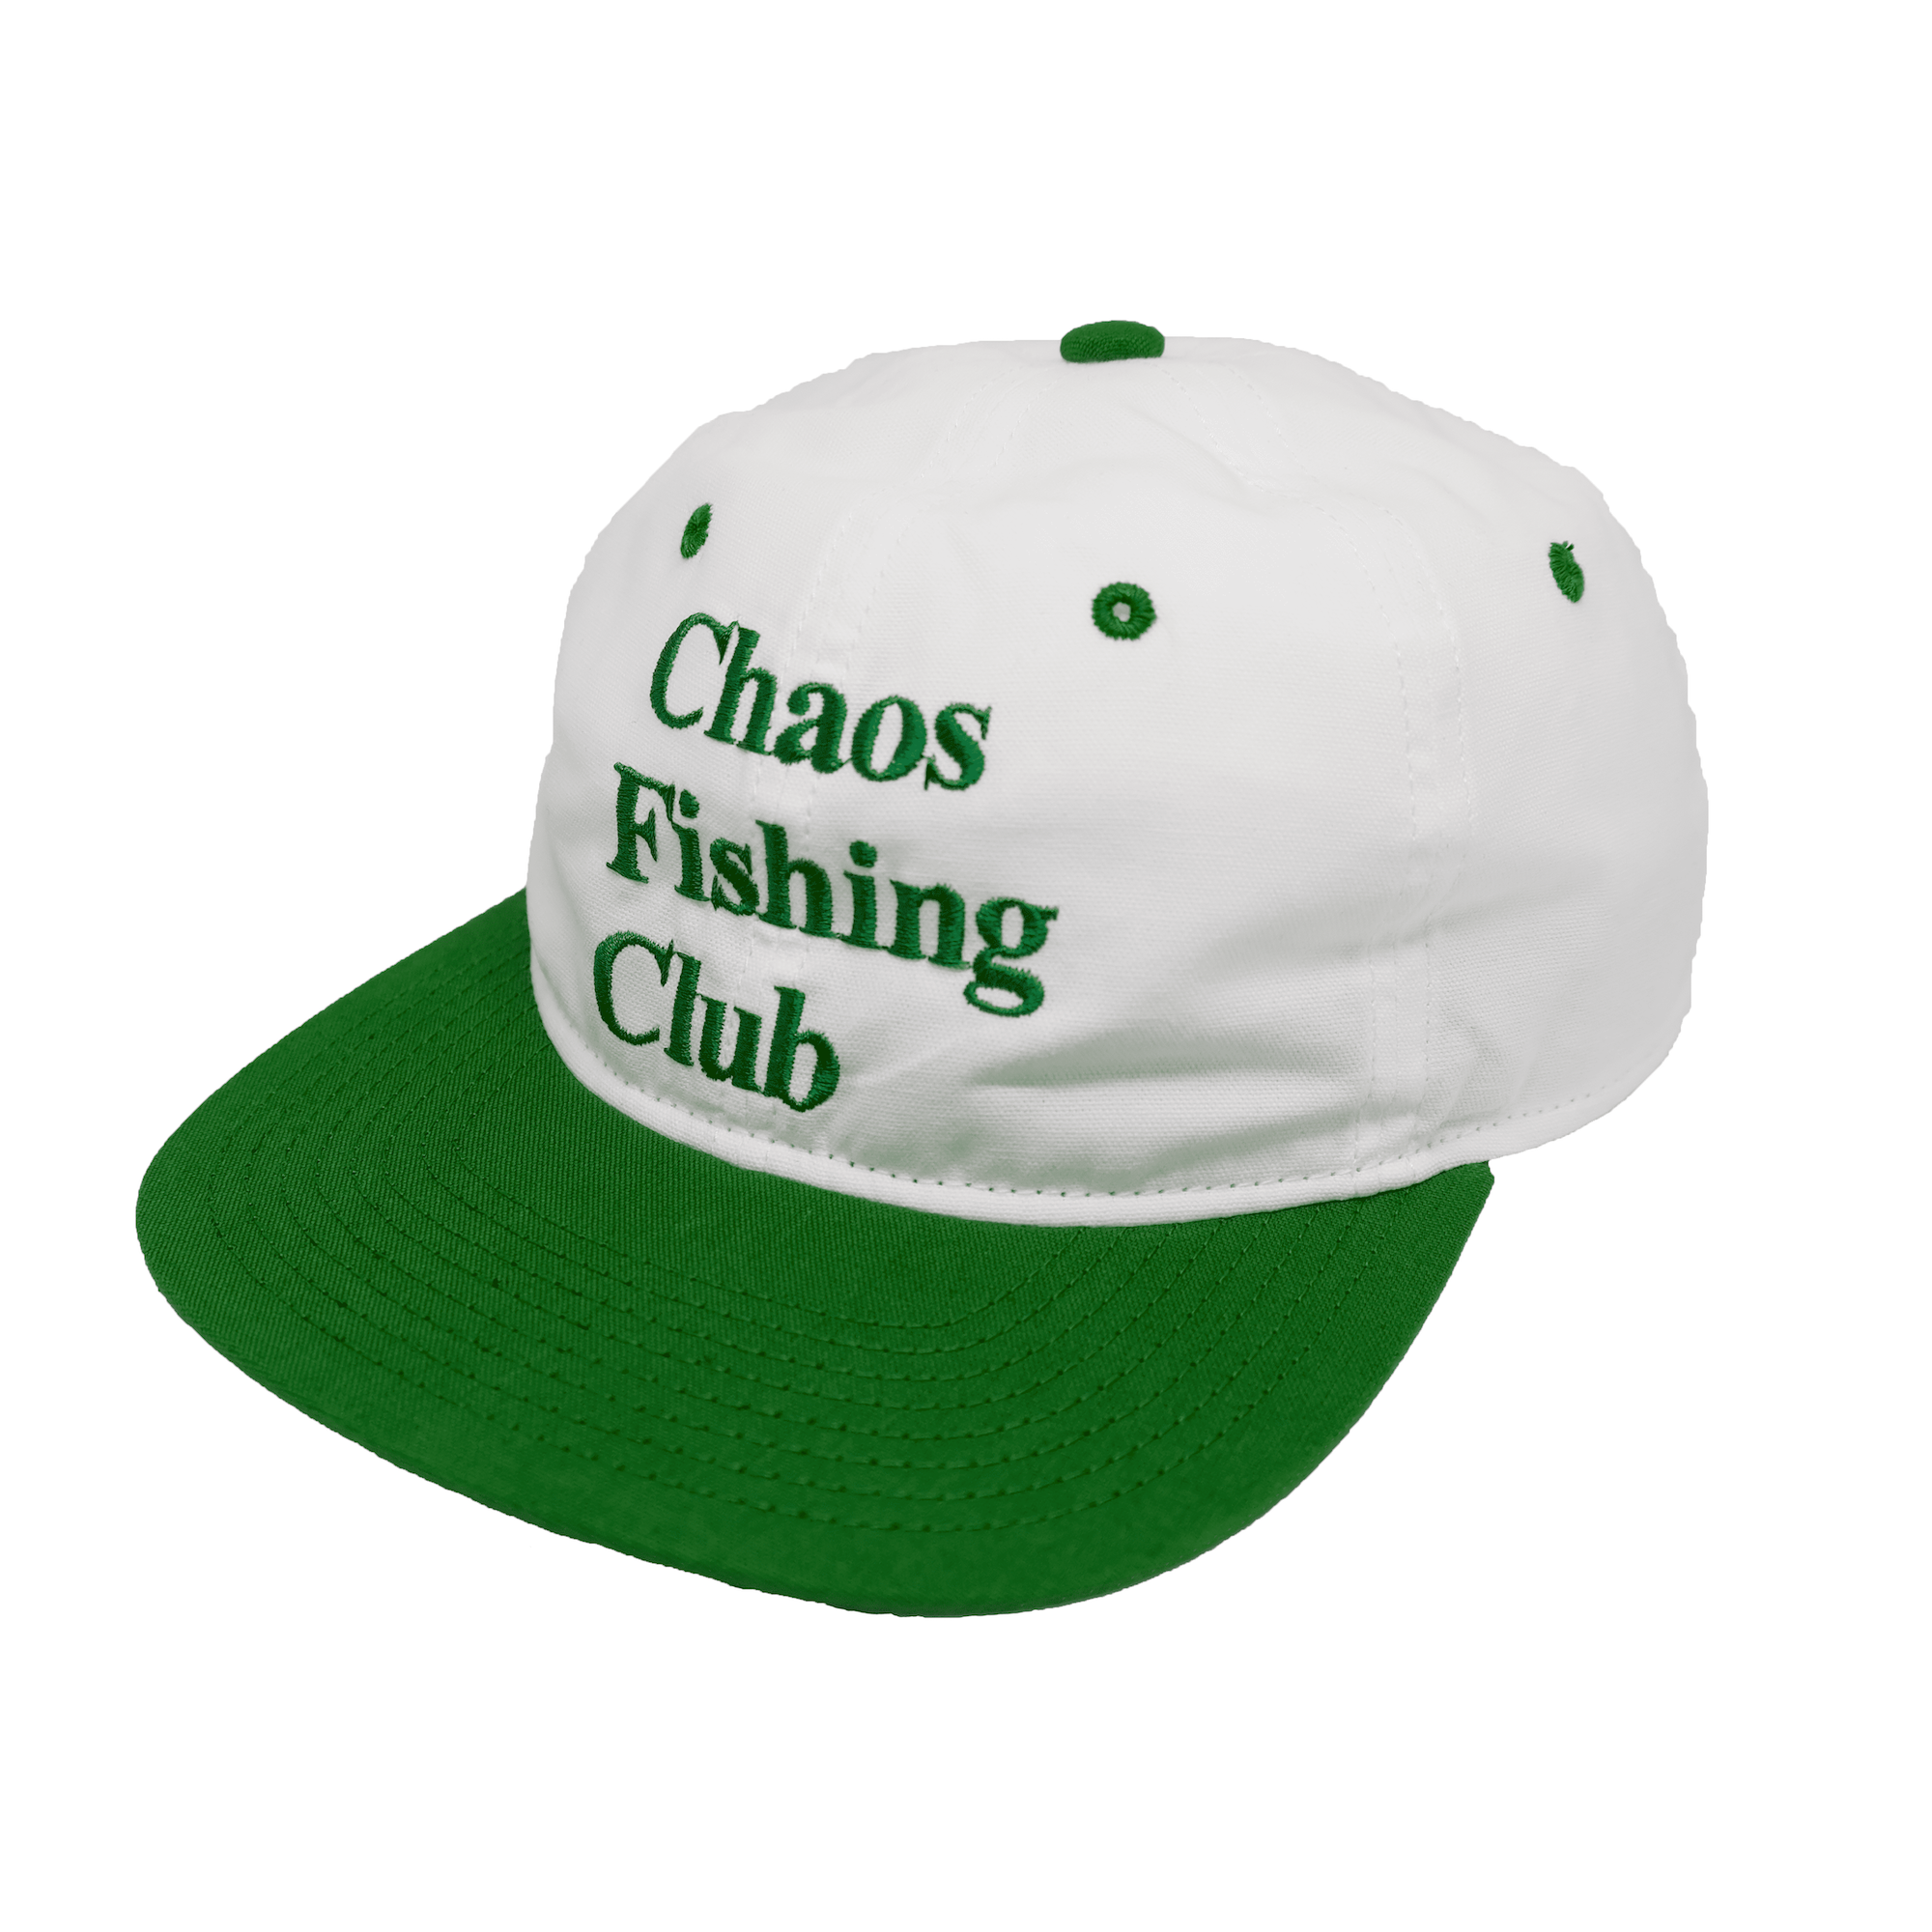 Chaos Fishing Club<br>LOGO CAP<br>